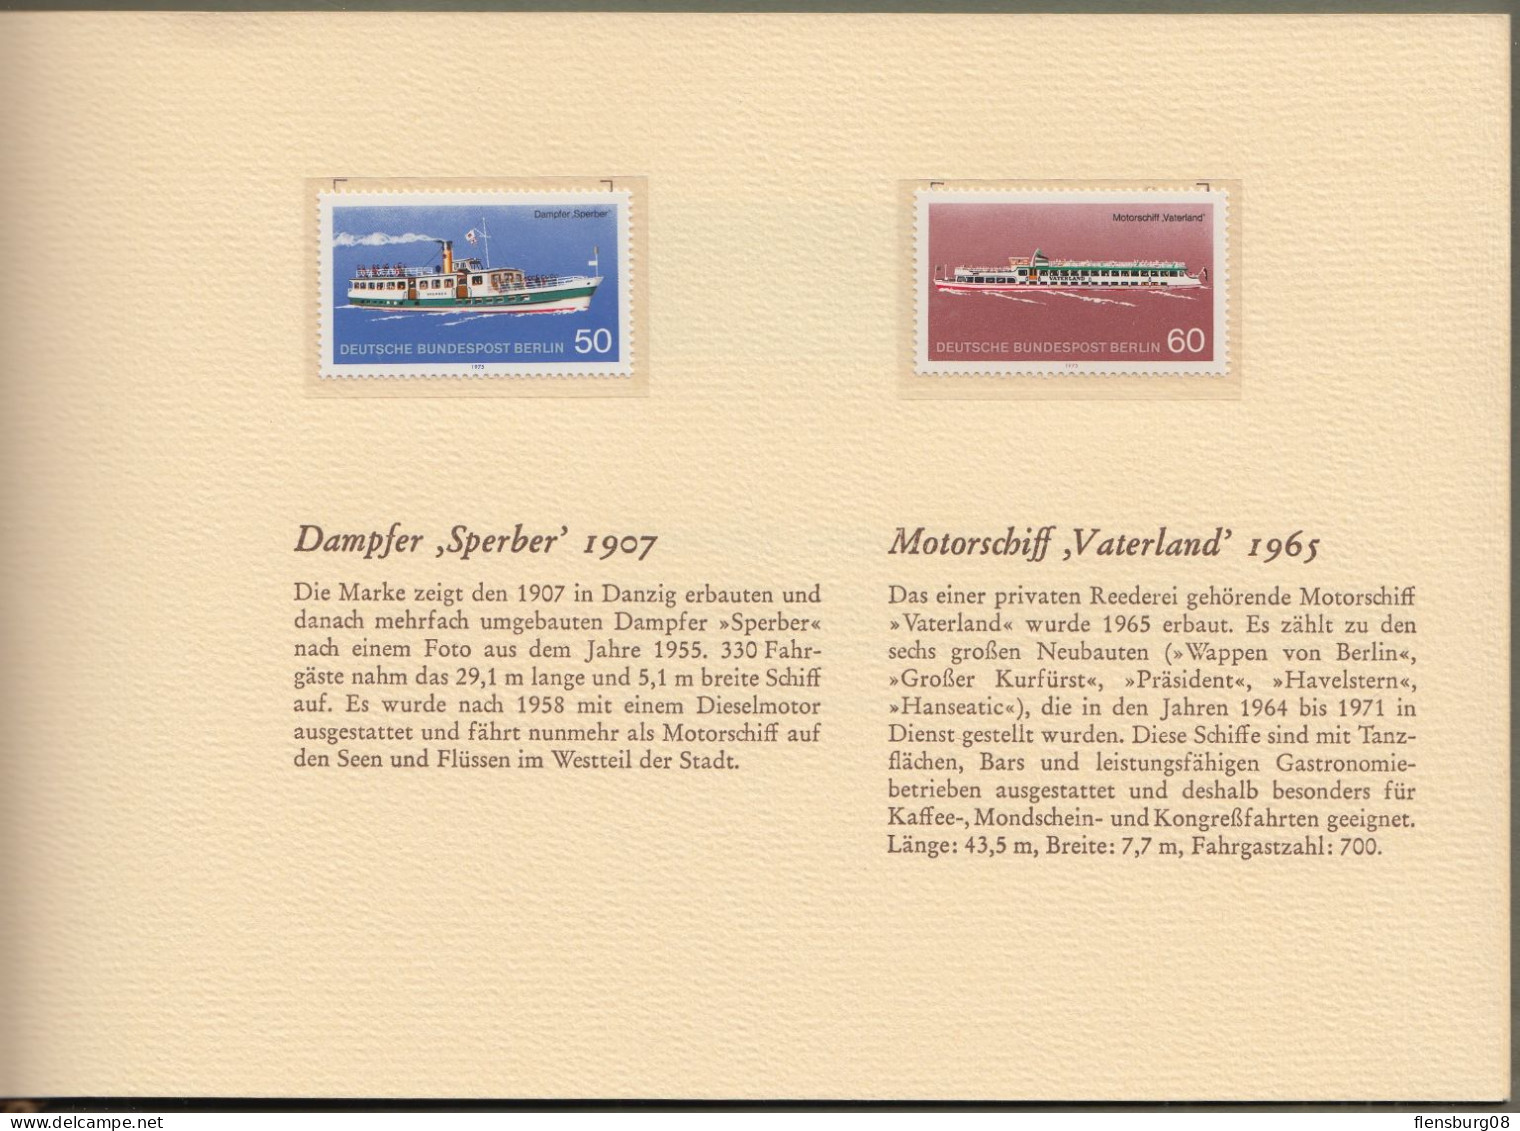 Berlin: minister booklet - Ministerbuch - Ministerheft , : " Sonderpostwertzeichen Berliner Verkehrsmittel 1975 "